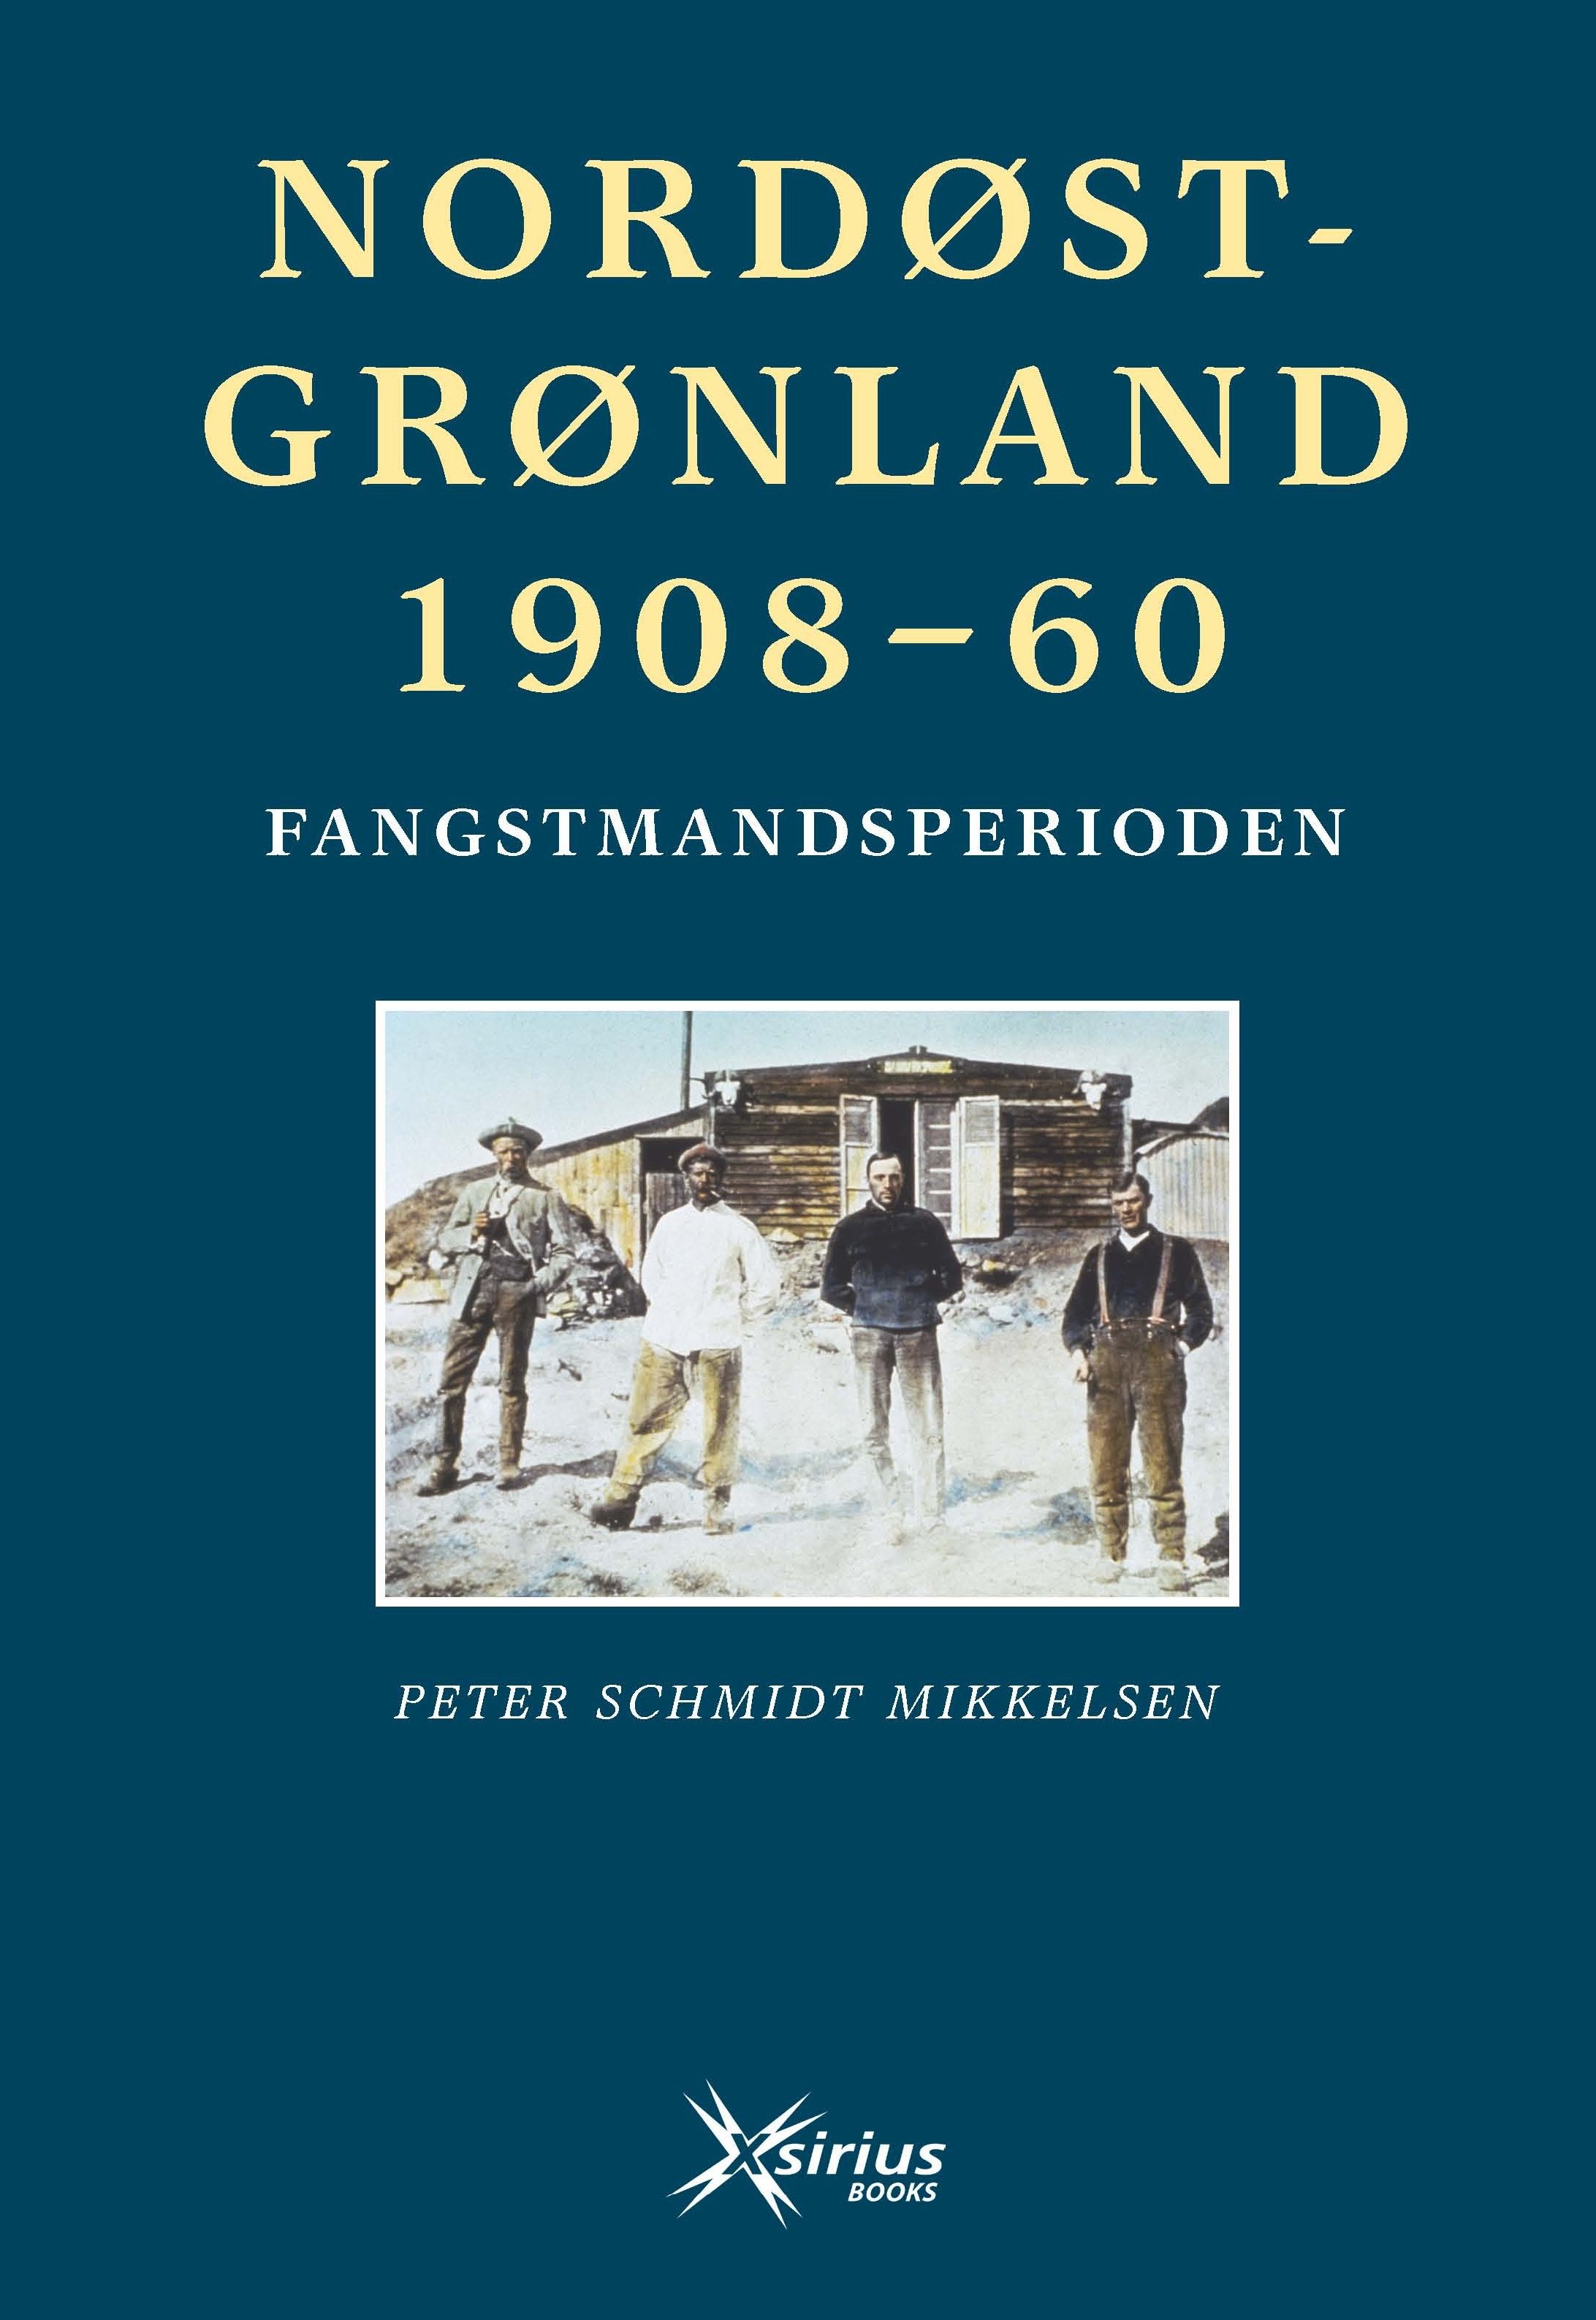 Nørdøstgrønland 1908-60